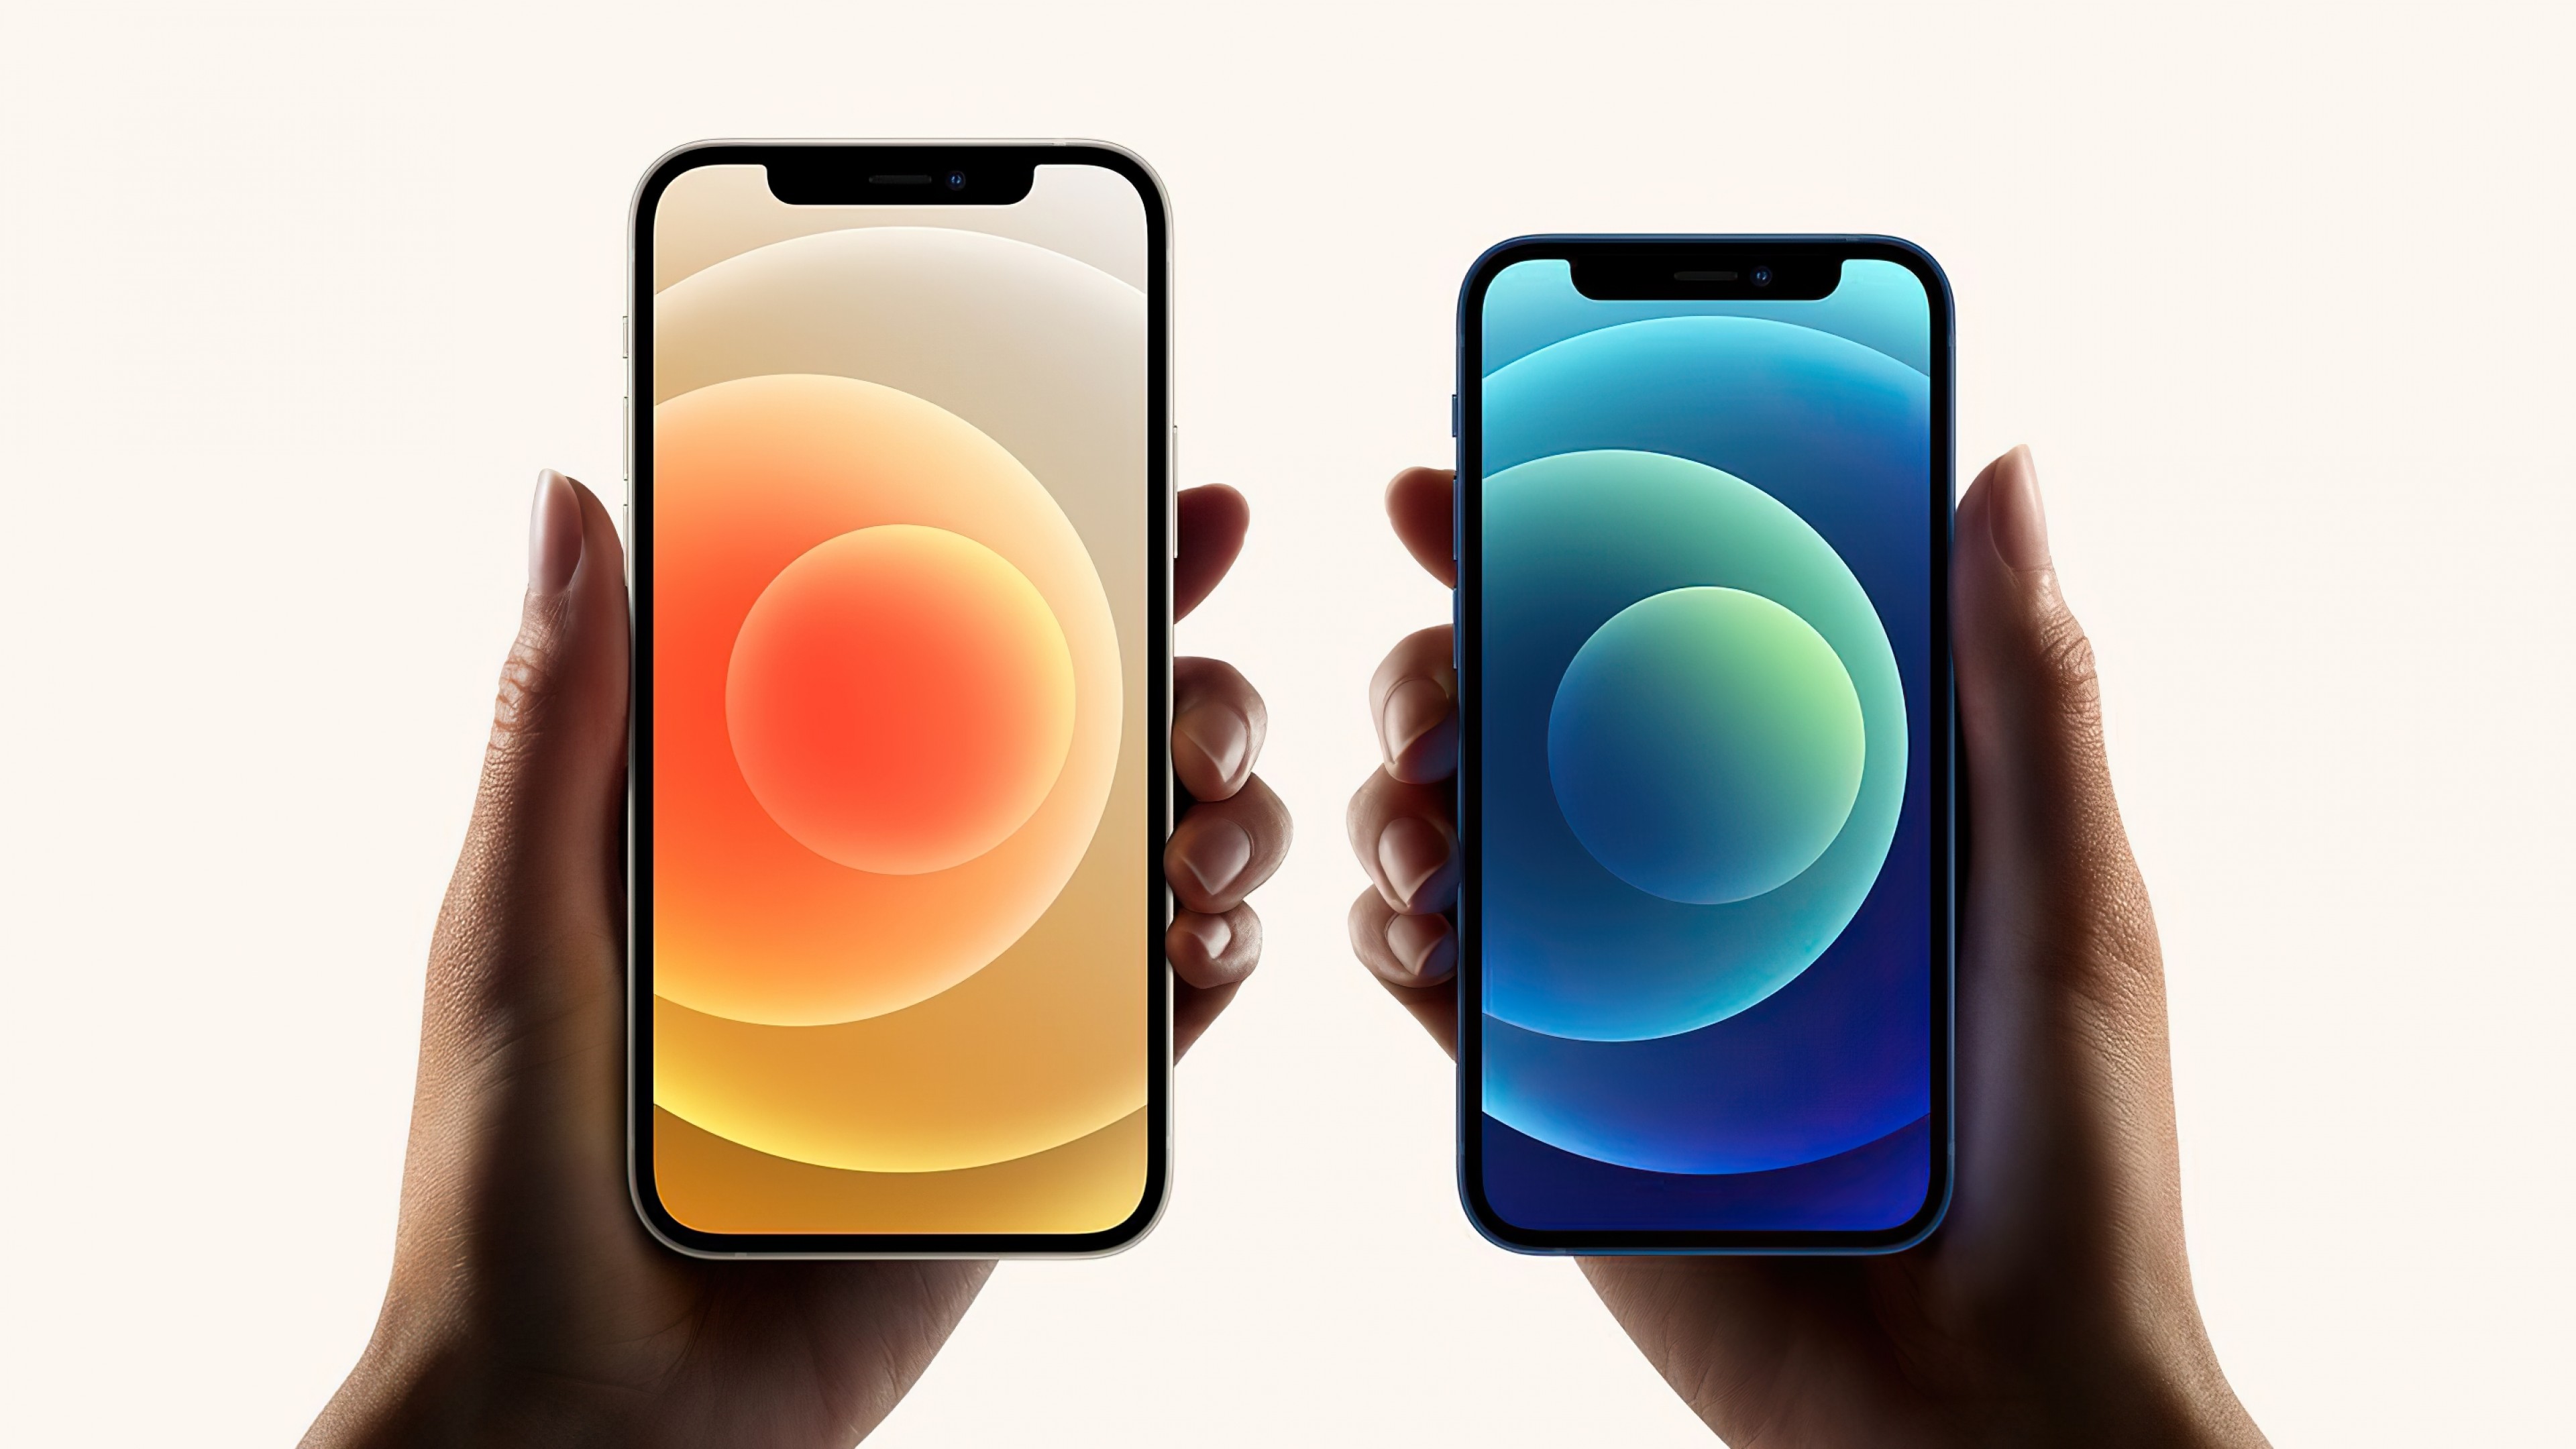 Wallpaper iPhone 12, iPhone 12 Mini, Apple October 2020 ...